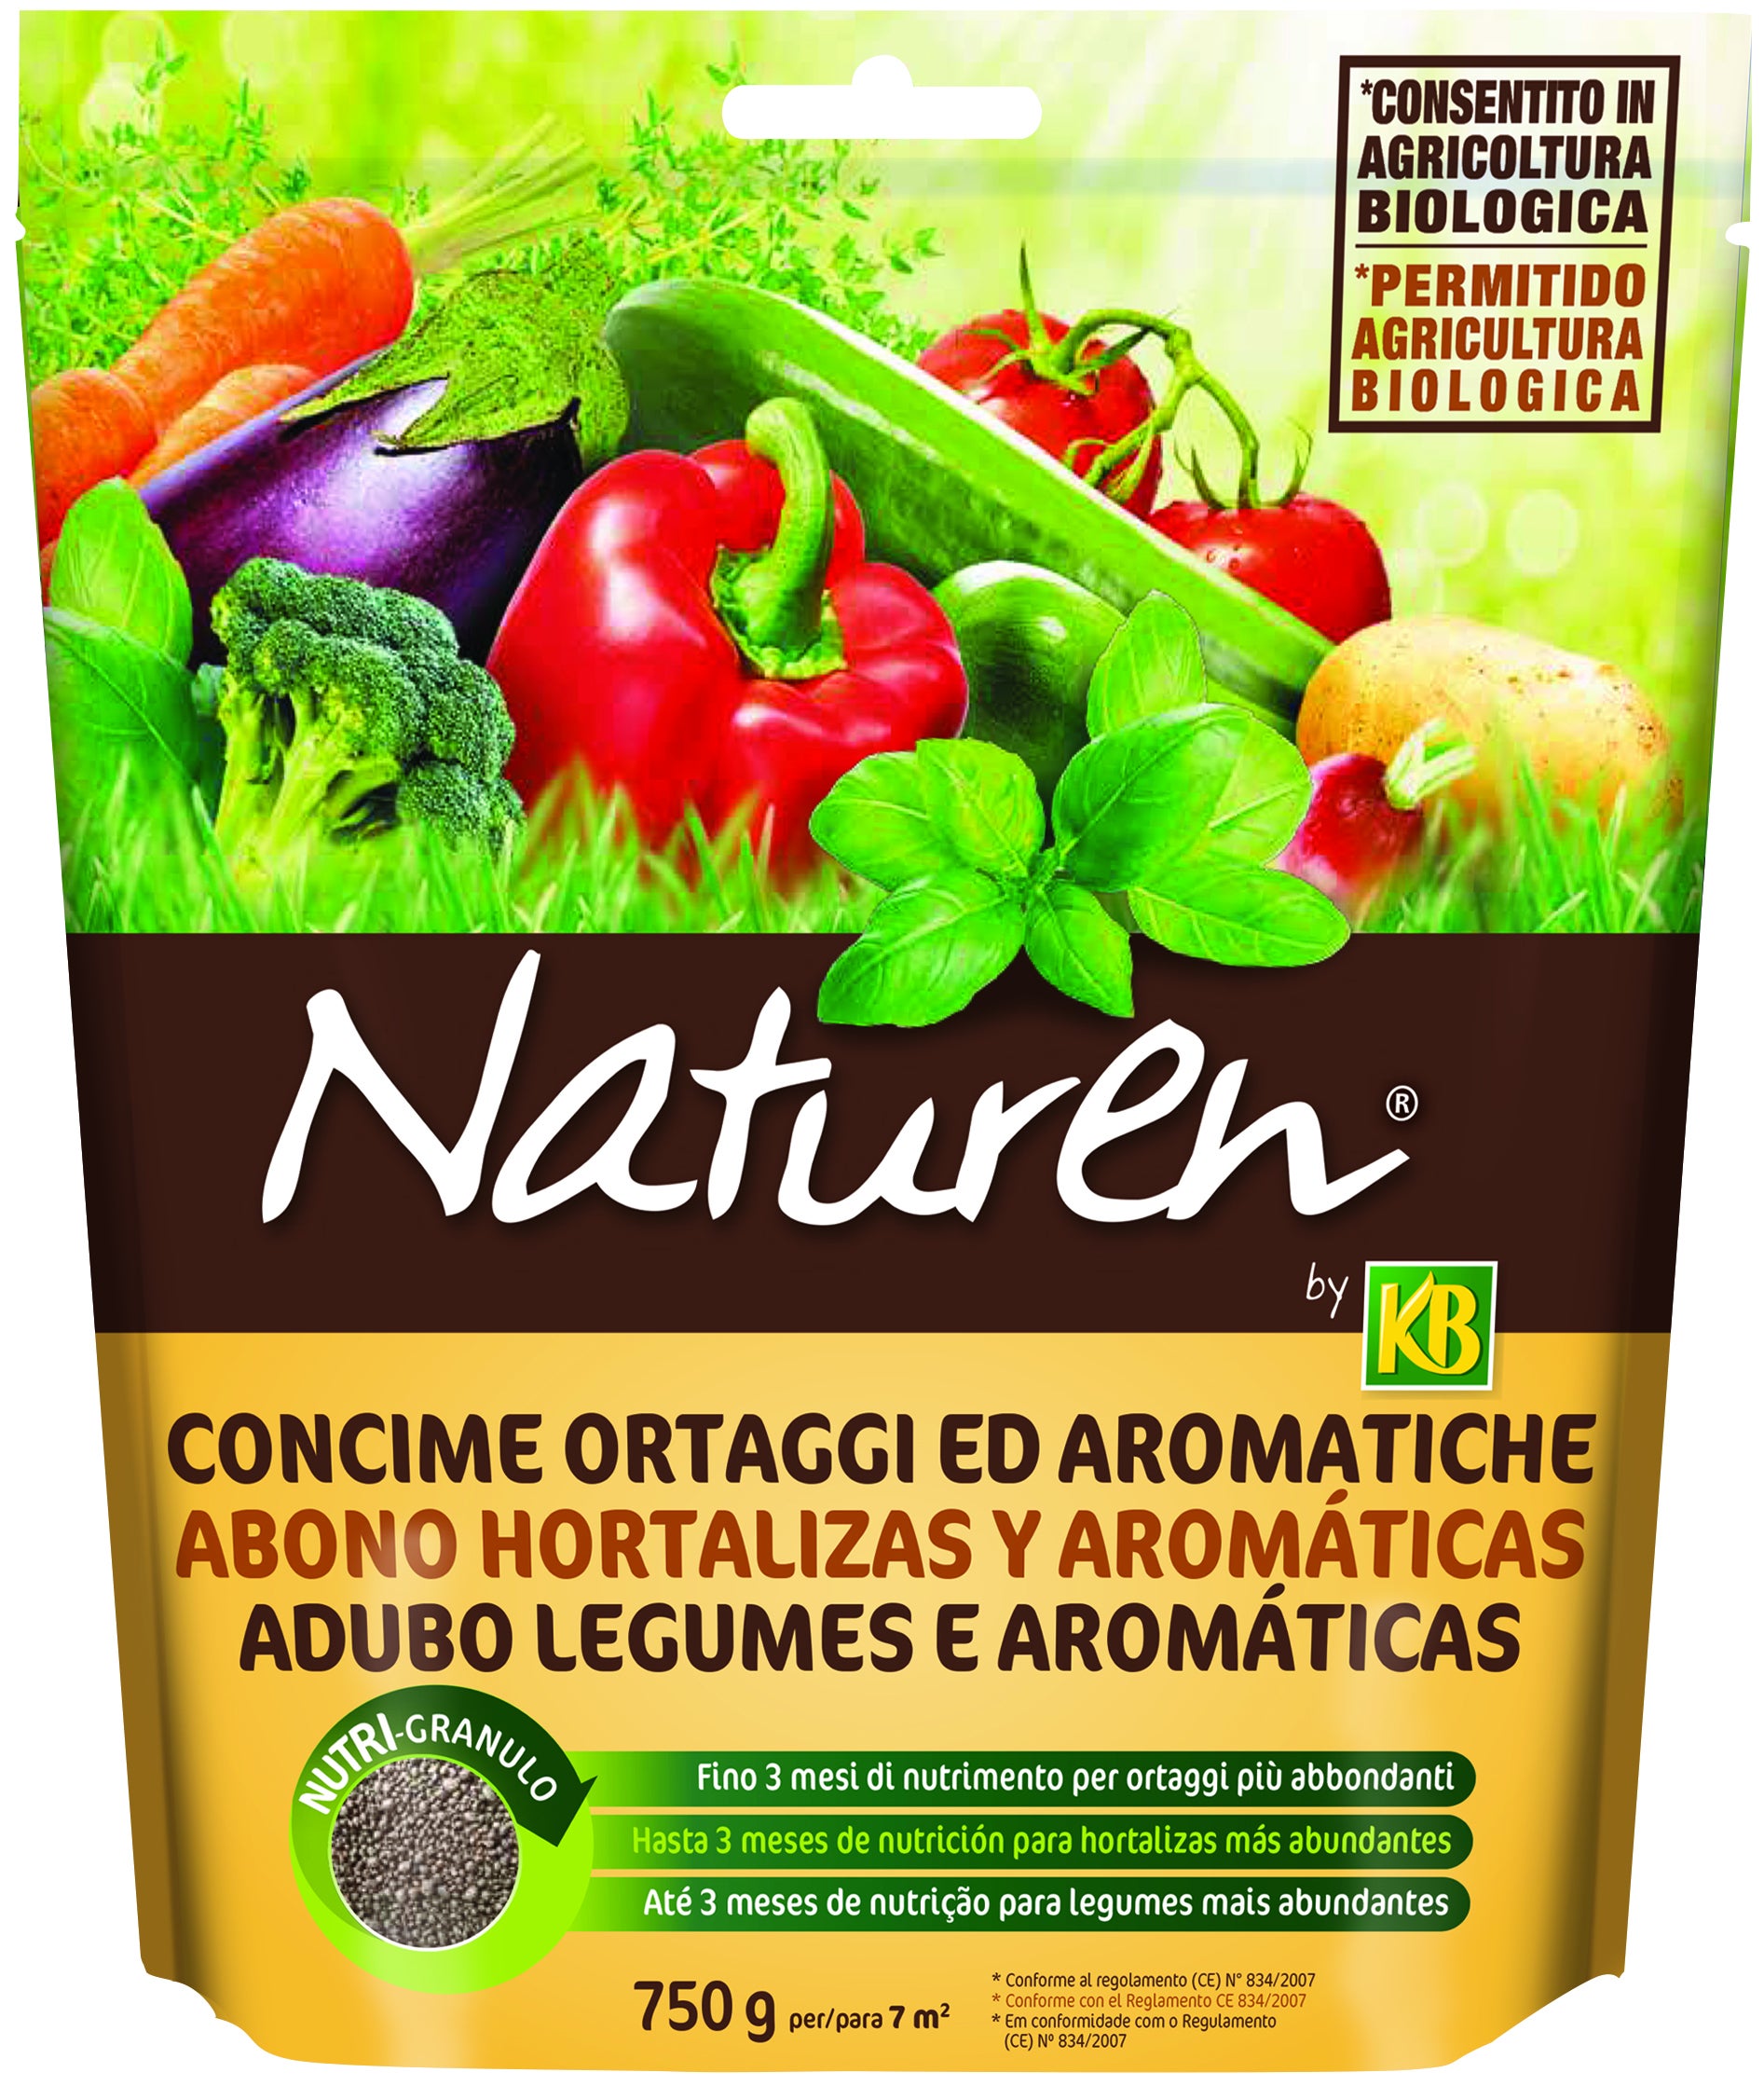 Bastonetes para legumes e ervas aromáticas, Naturen by KB – Portal